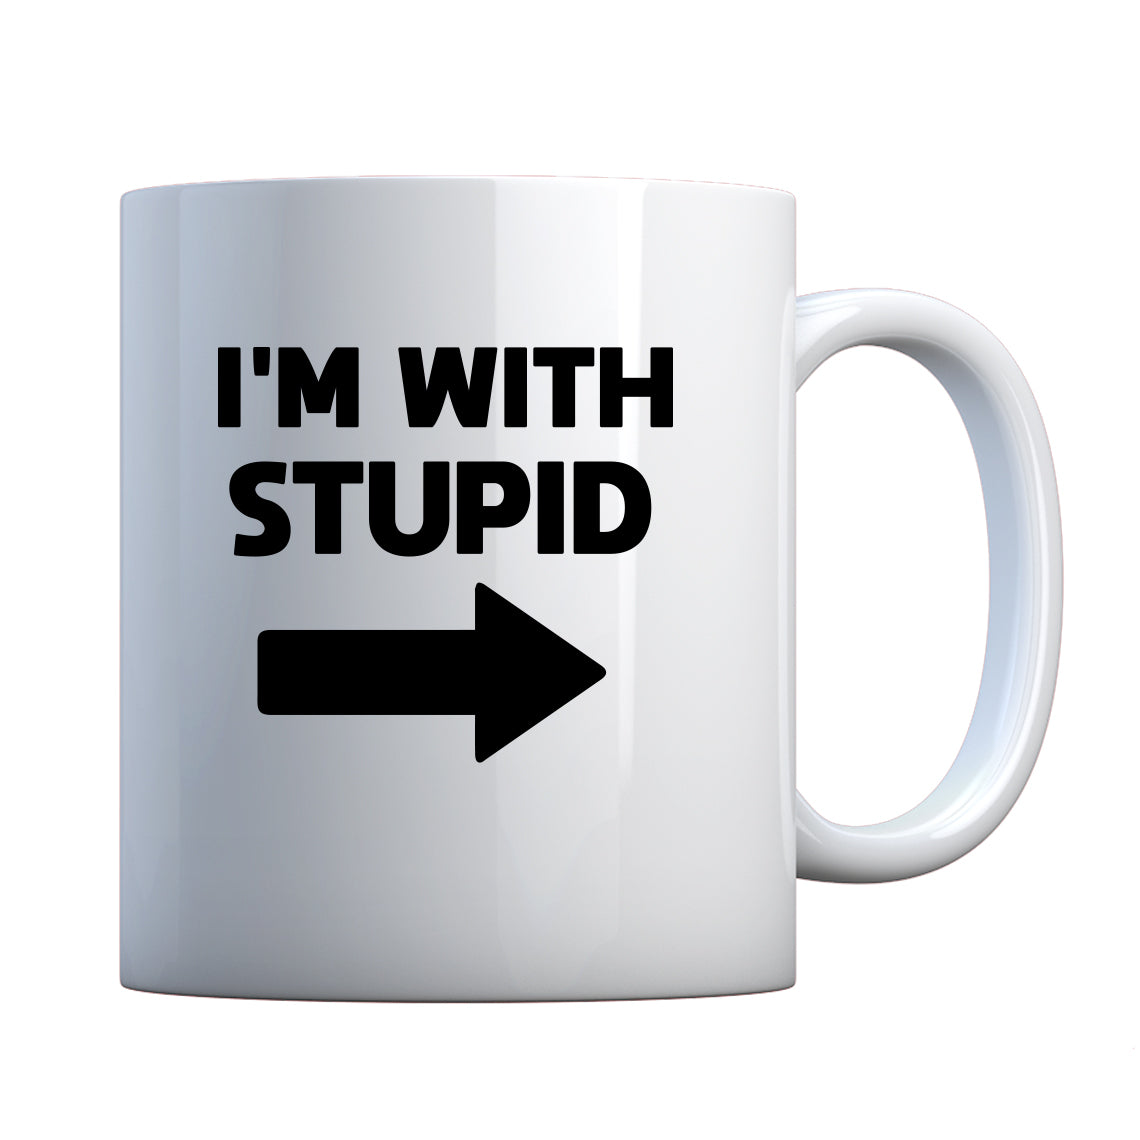 I'm With Stupid Right Ceramic Gift Mug